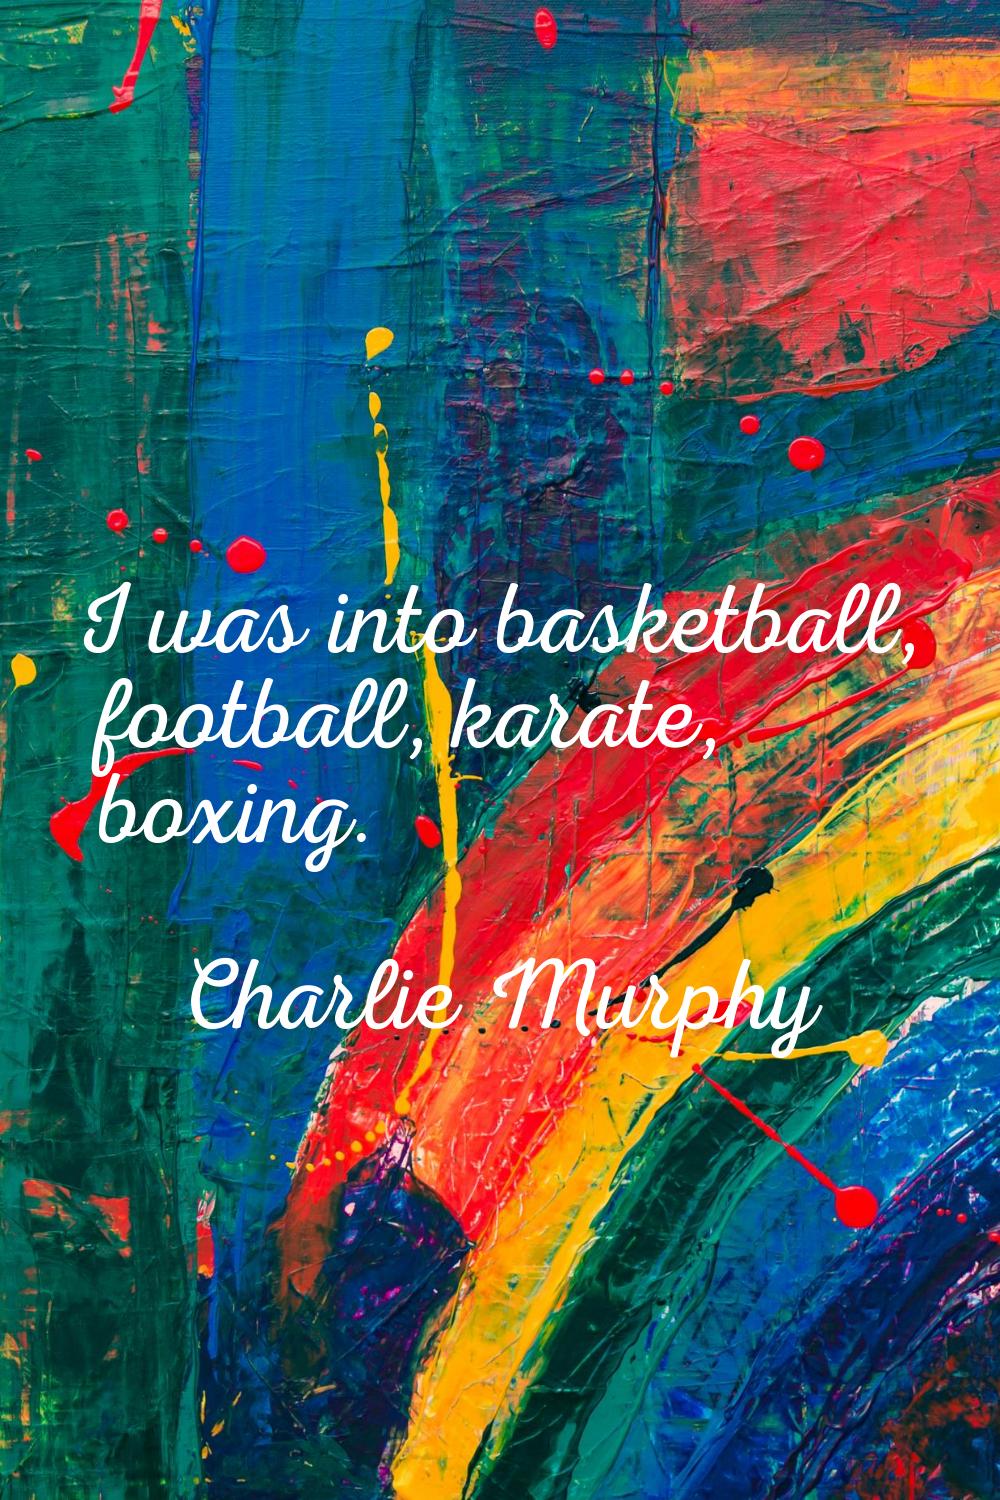 I was into basketball, football, karate, boxing.